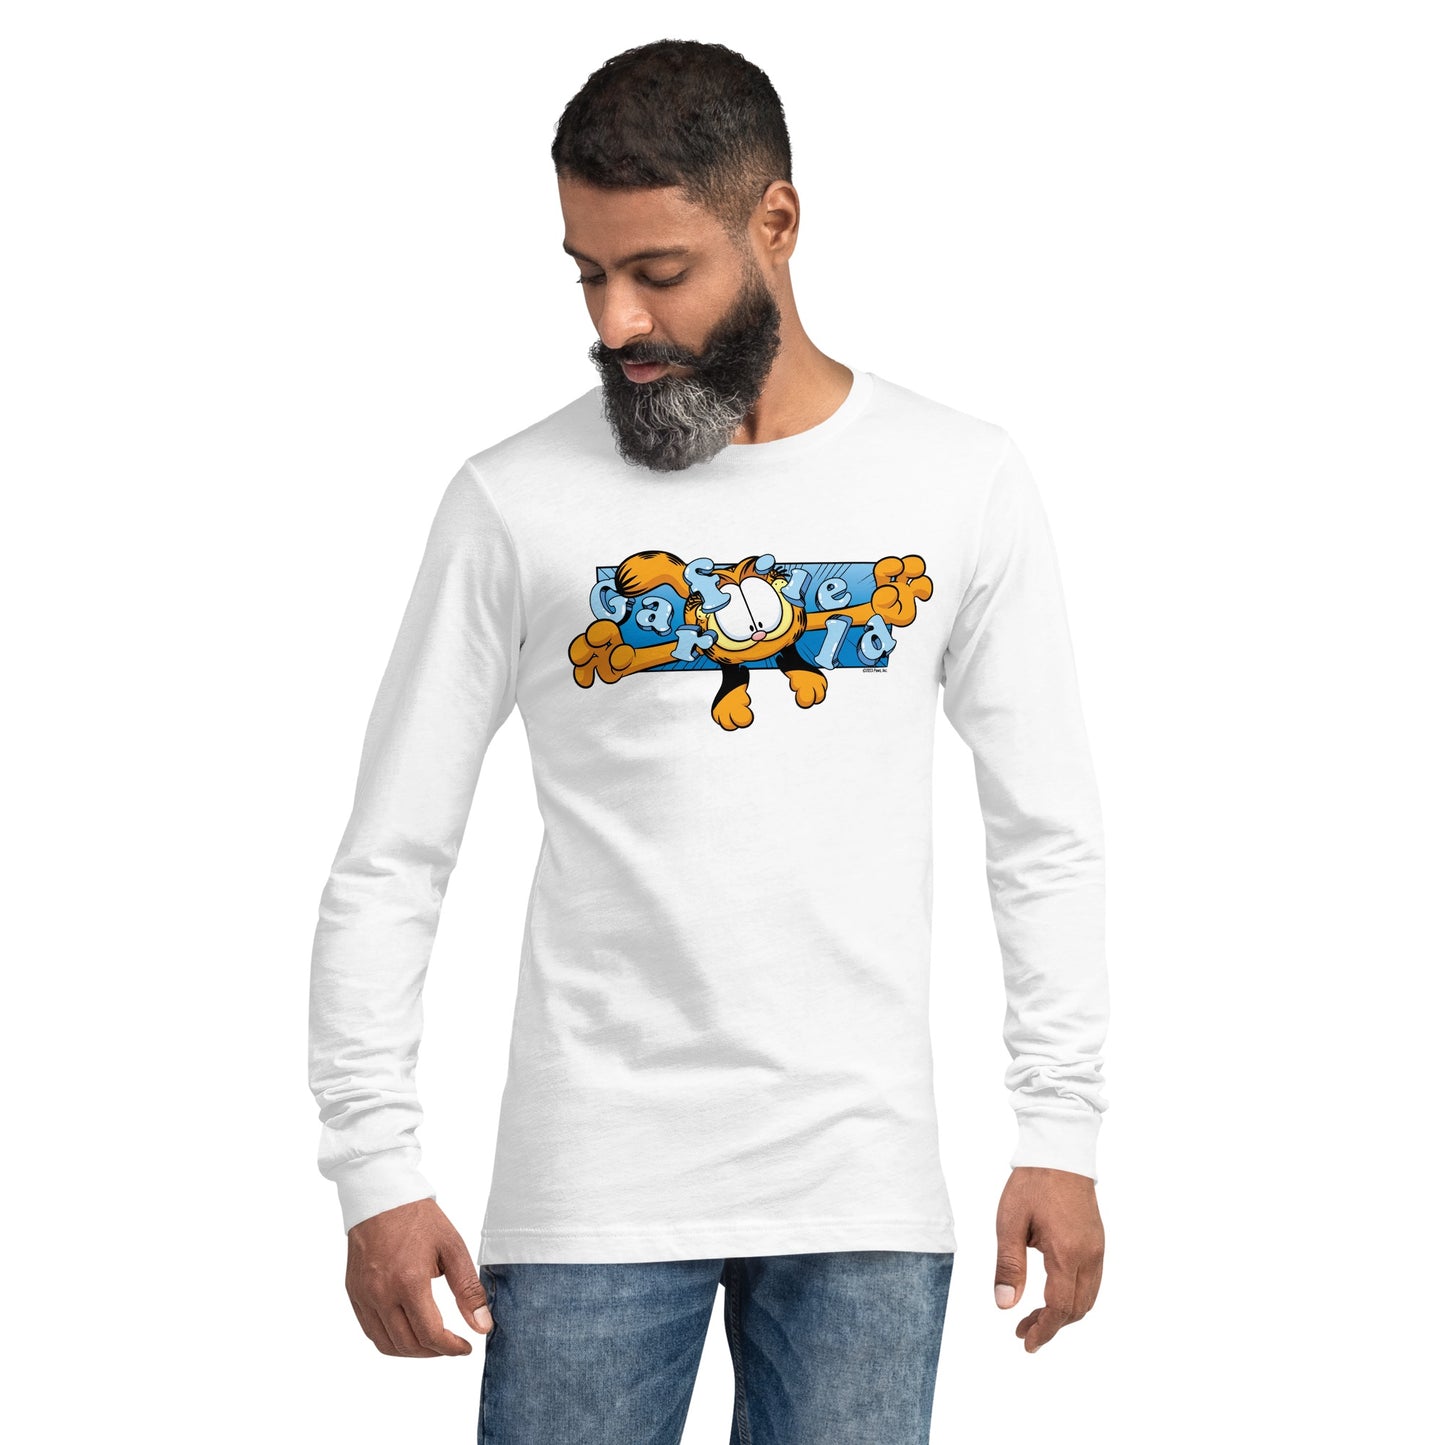 Garfield Flying Garfield Adult Long Sleeve T-Shirt